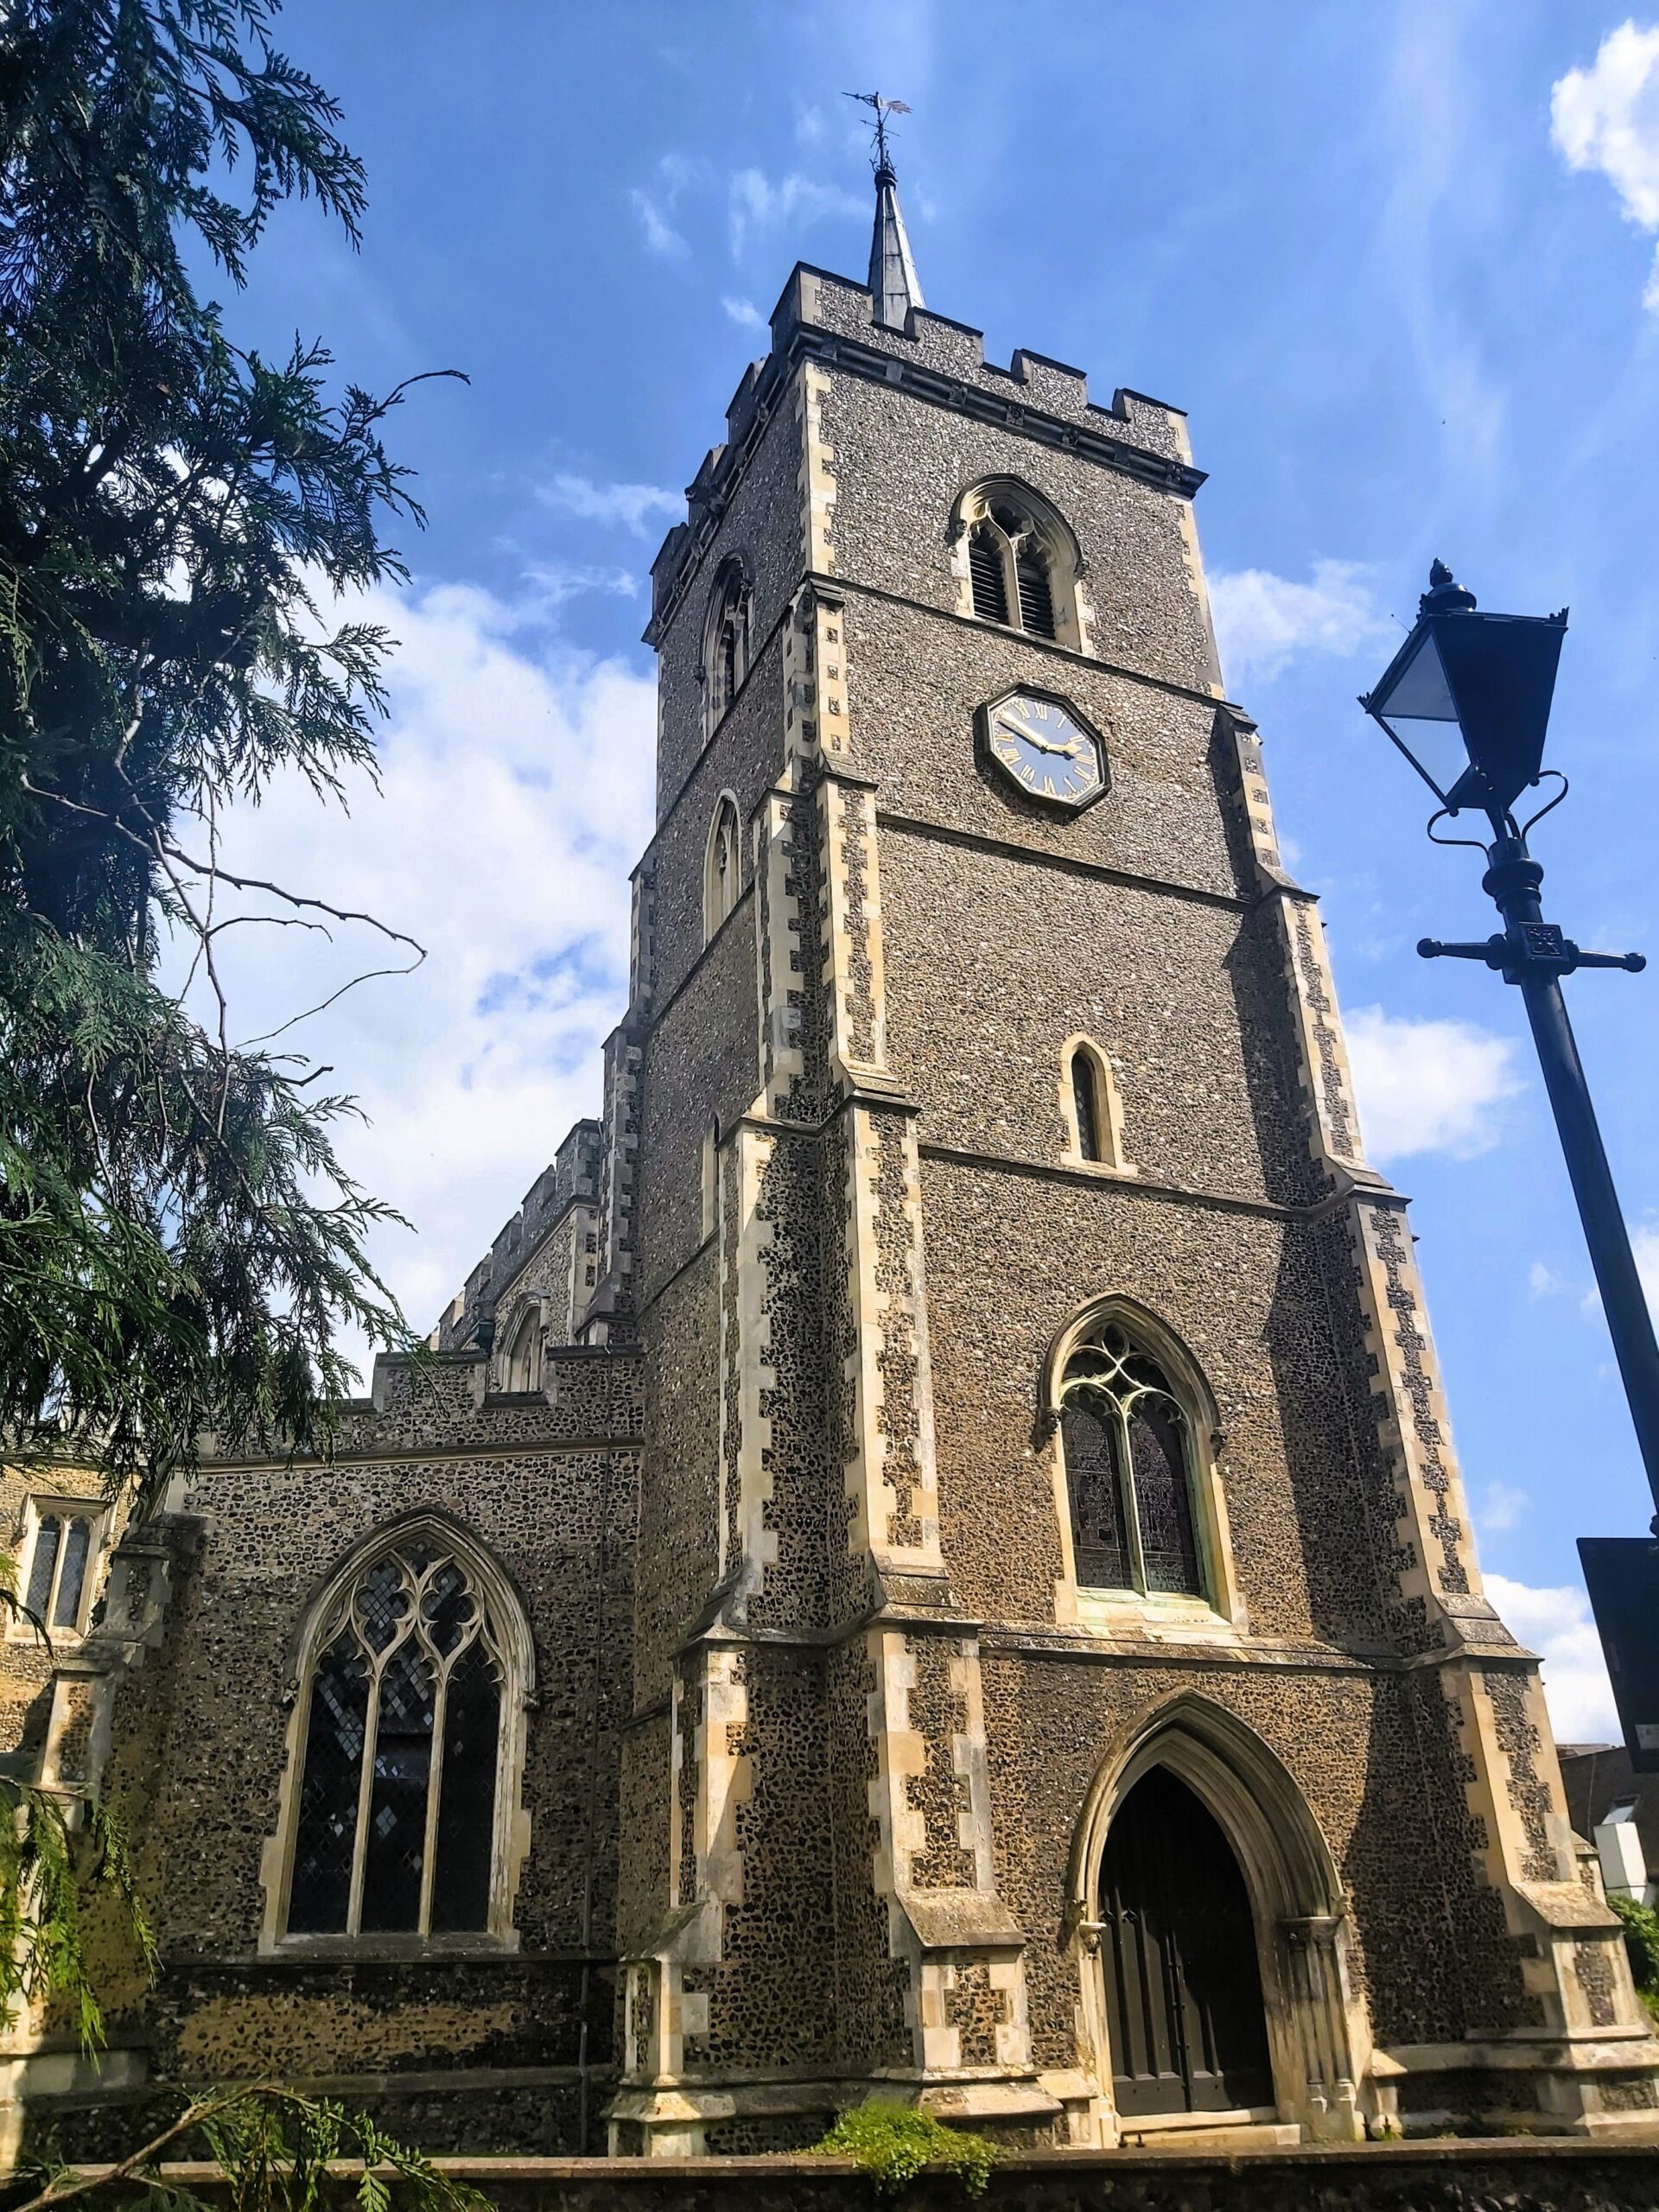 St Mary's Church, Ware, England